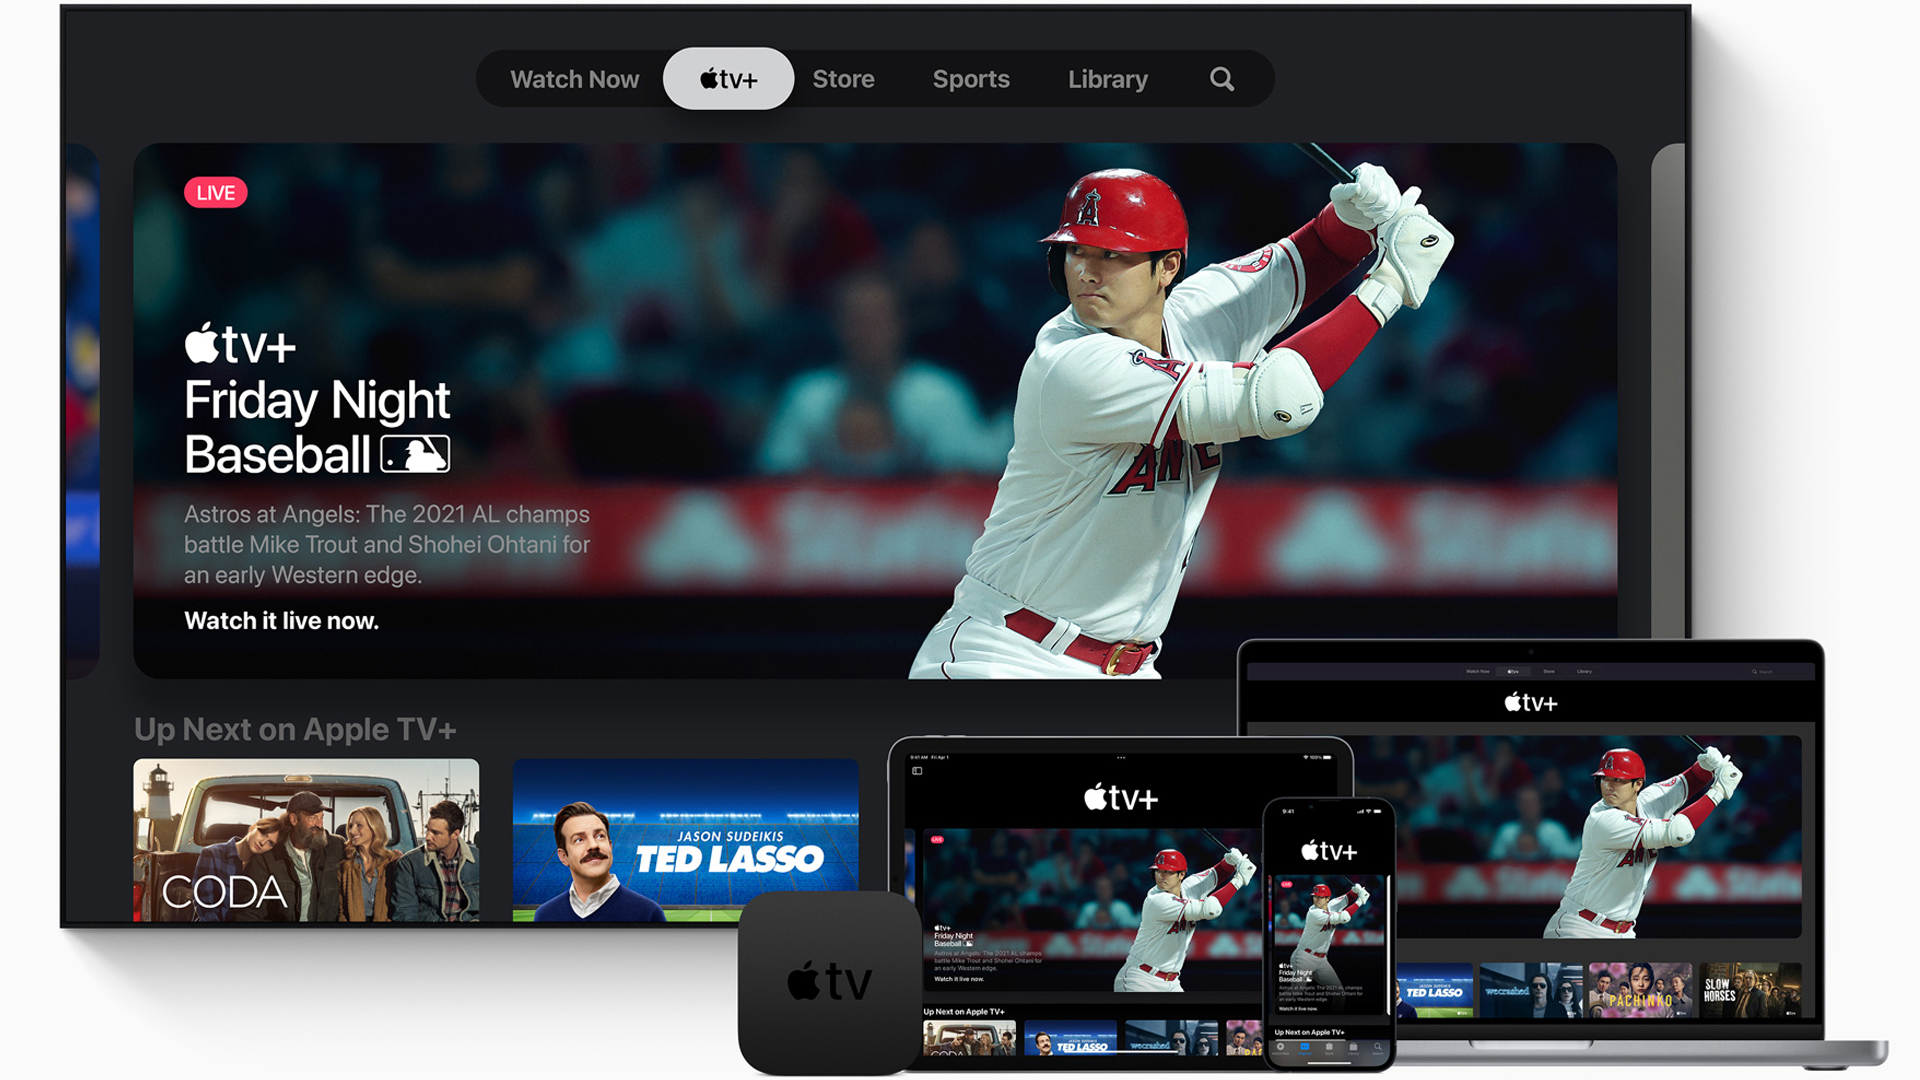 Apple TV+ announces its 2nd season of 'Friday Night Baseball